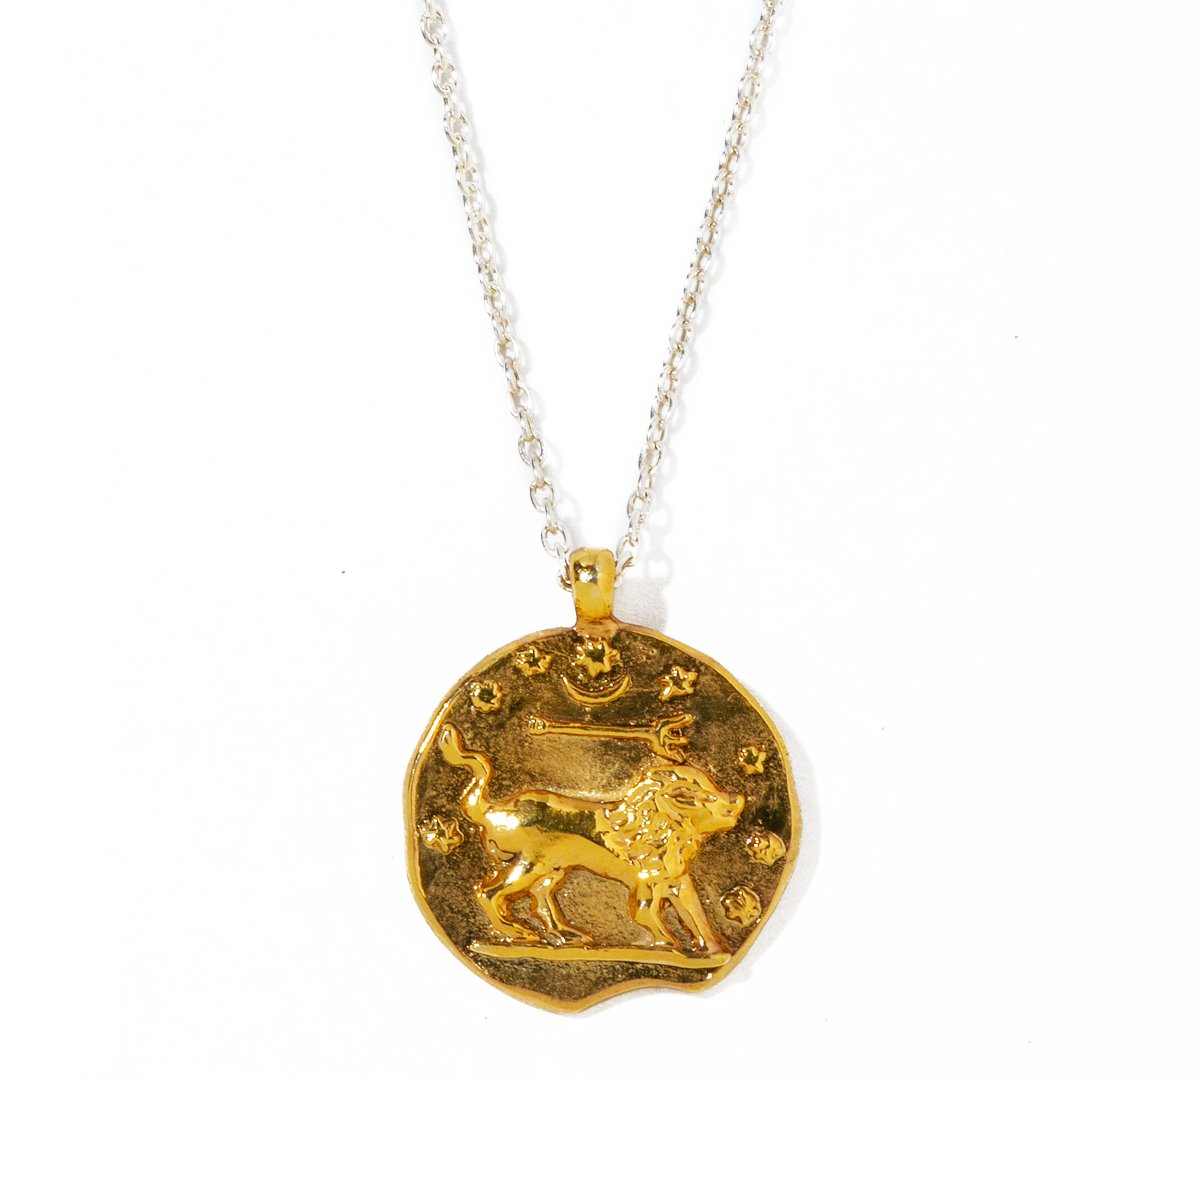 leo necklace | IRIS47 official online store